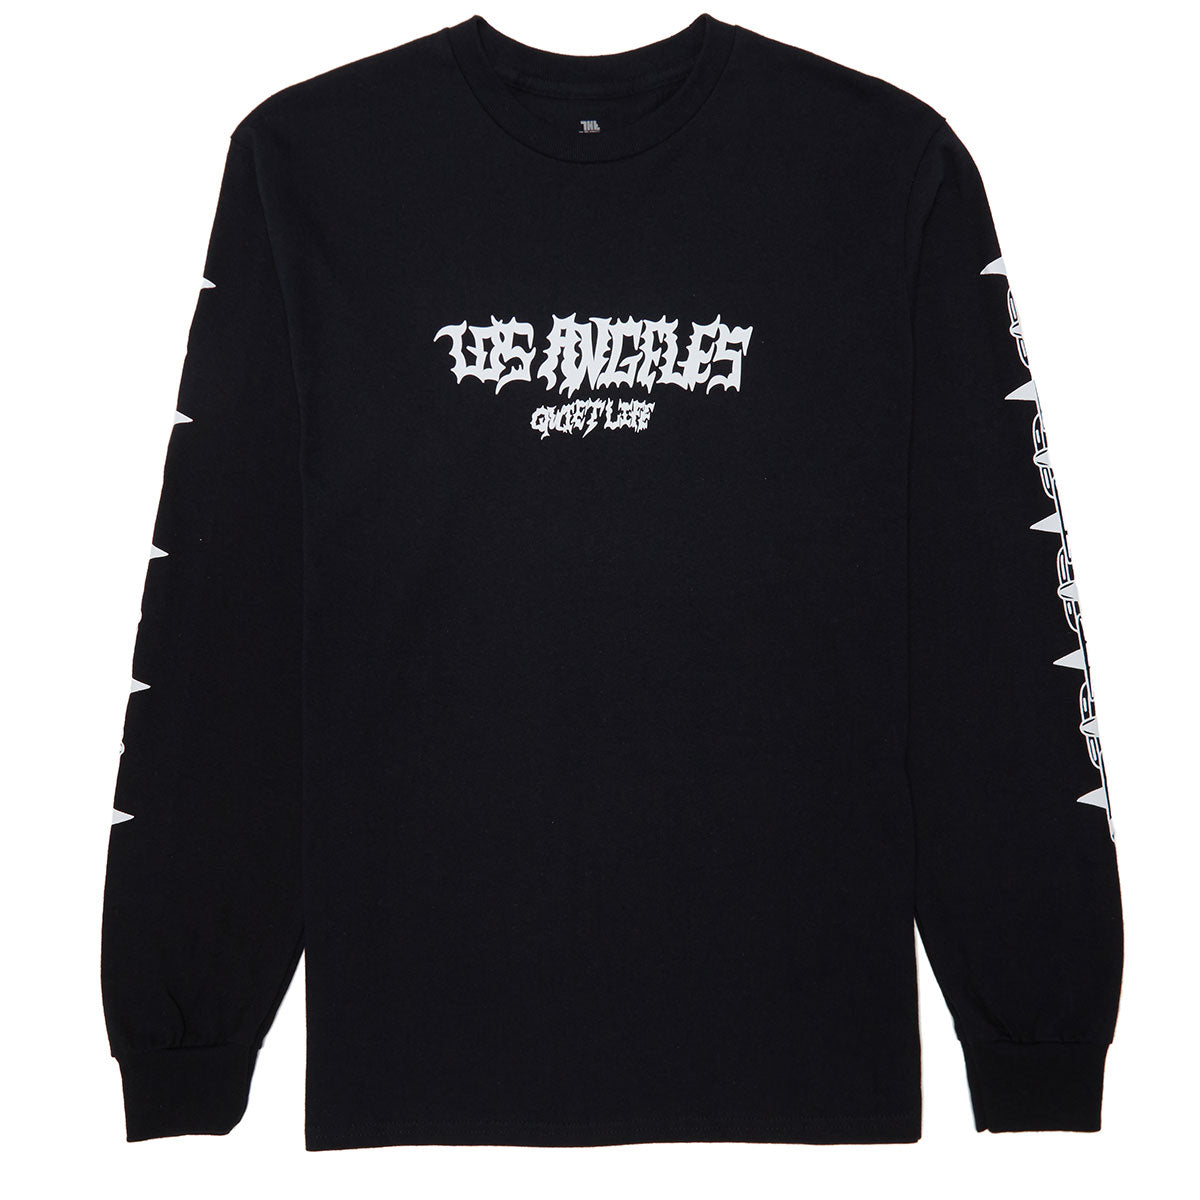 The Quiet Life x Jay Howell LA Long Sleeve T-Shirt - Black image 1